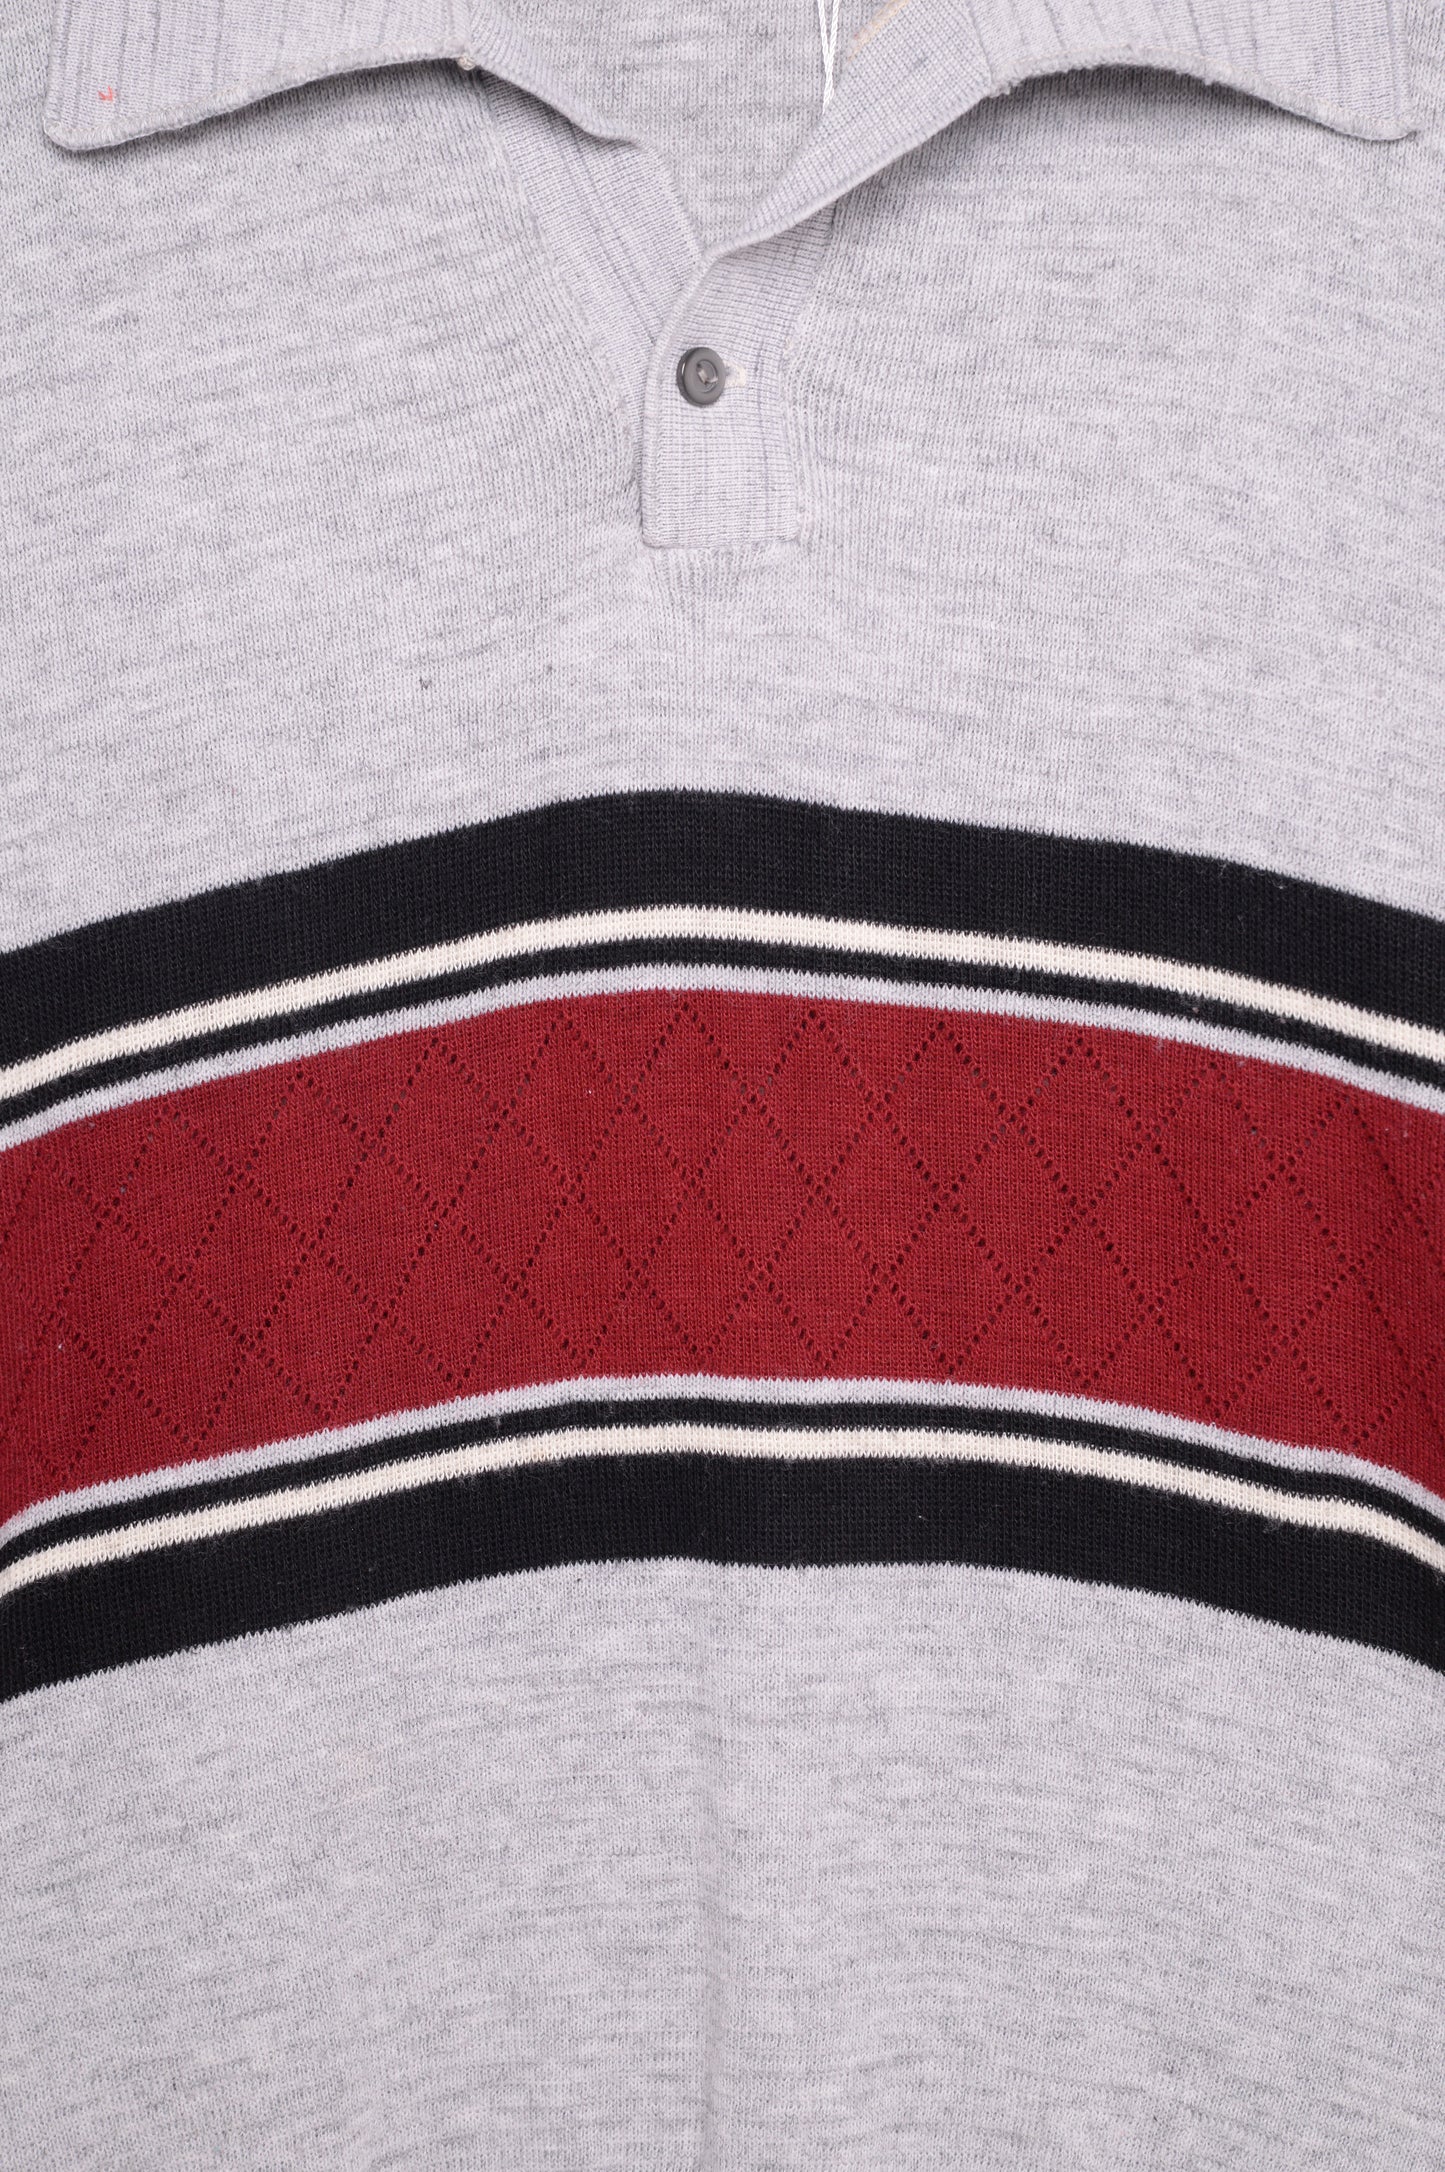 1970s Striped Collared Sweater